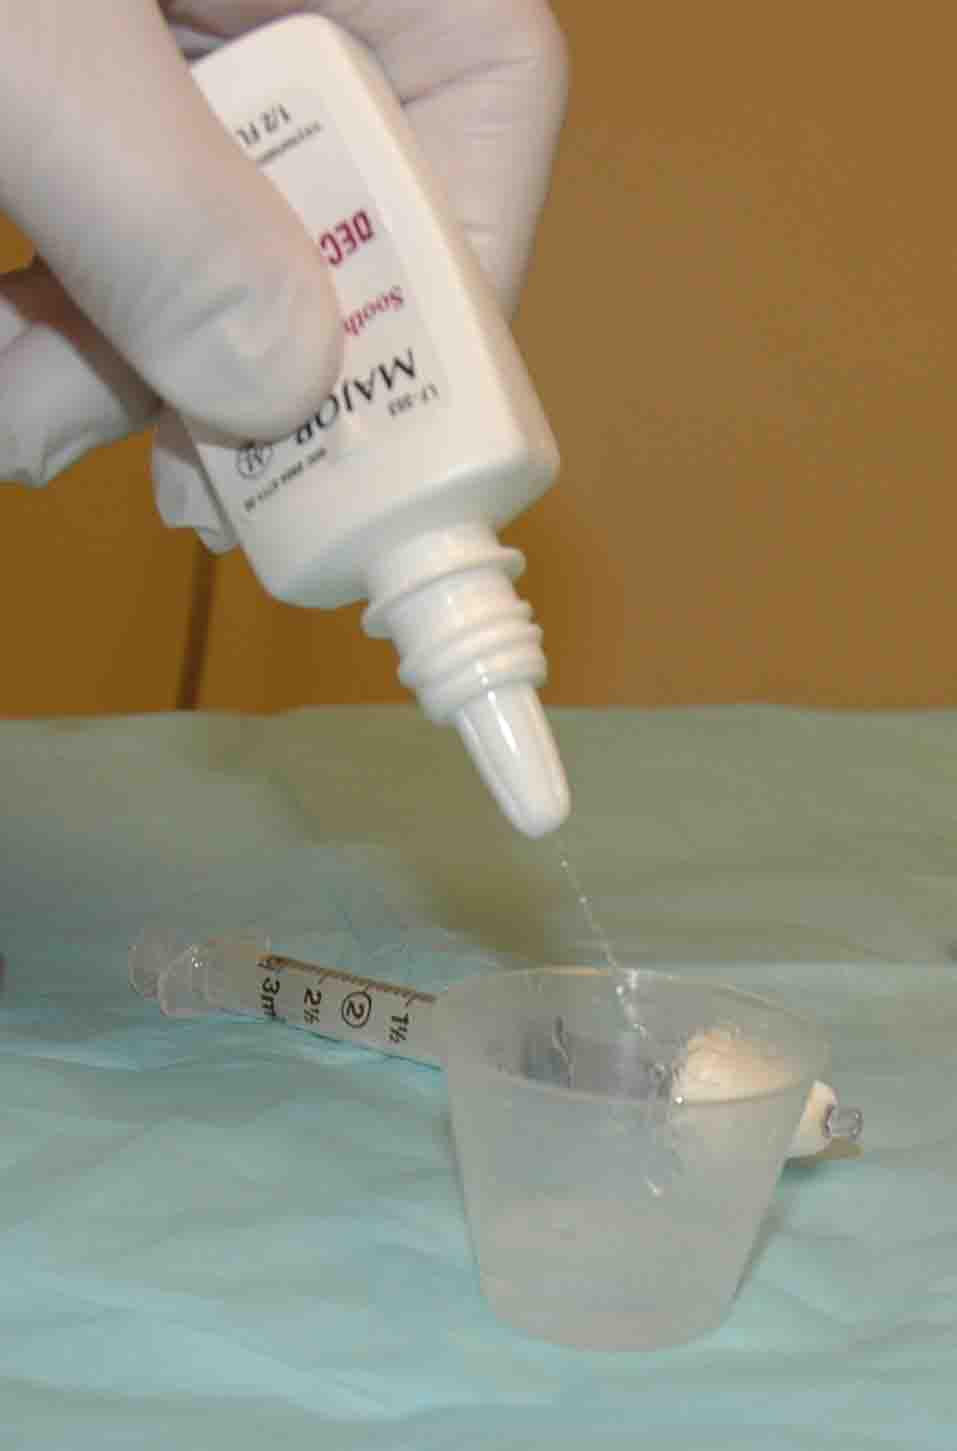 Spray oxymetazoline into a cup to soak cotton ball